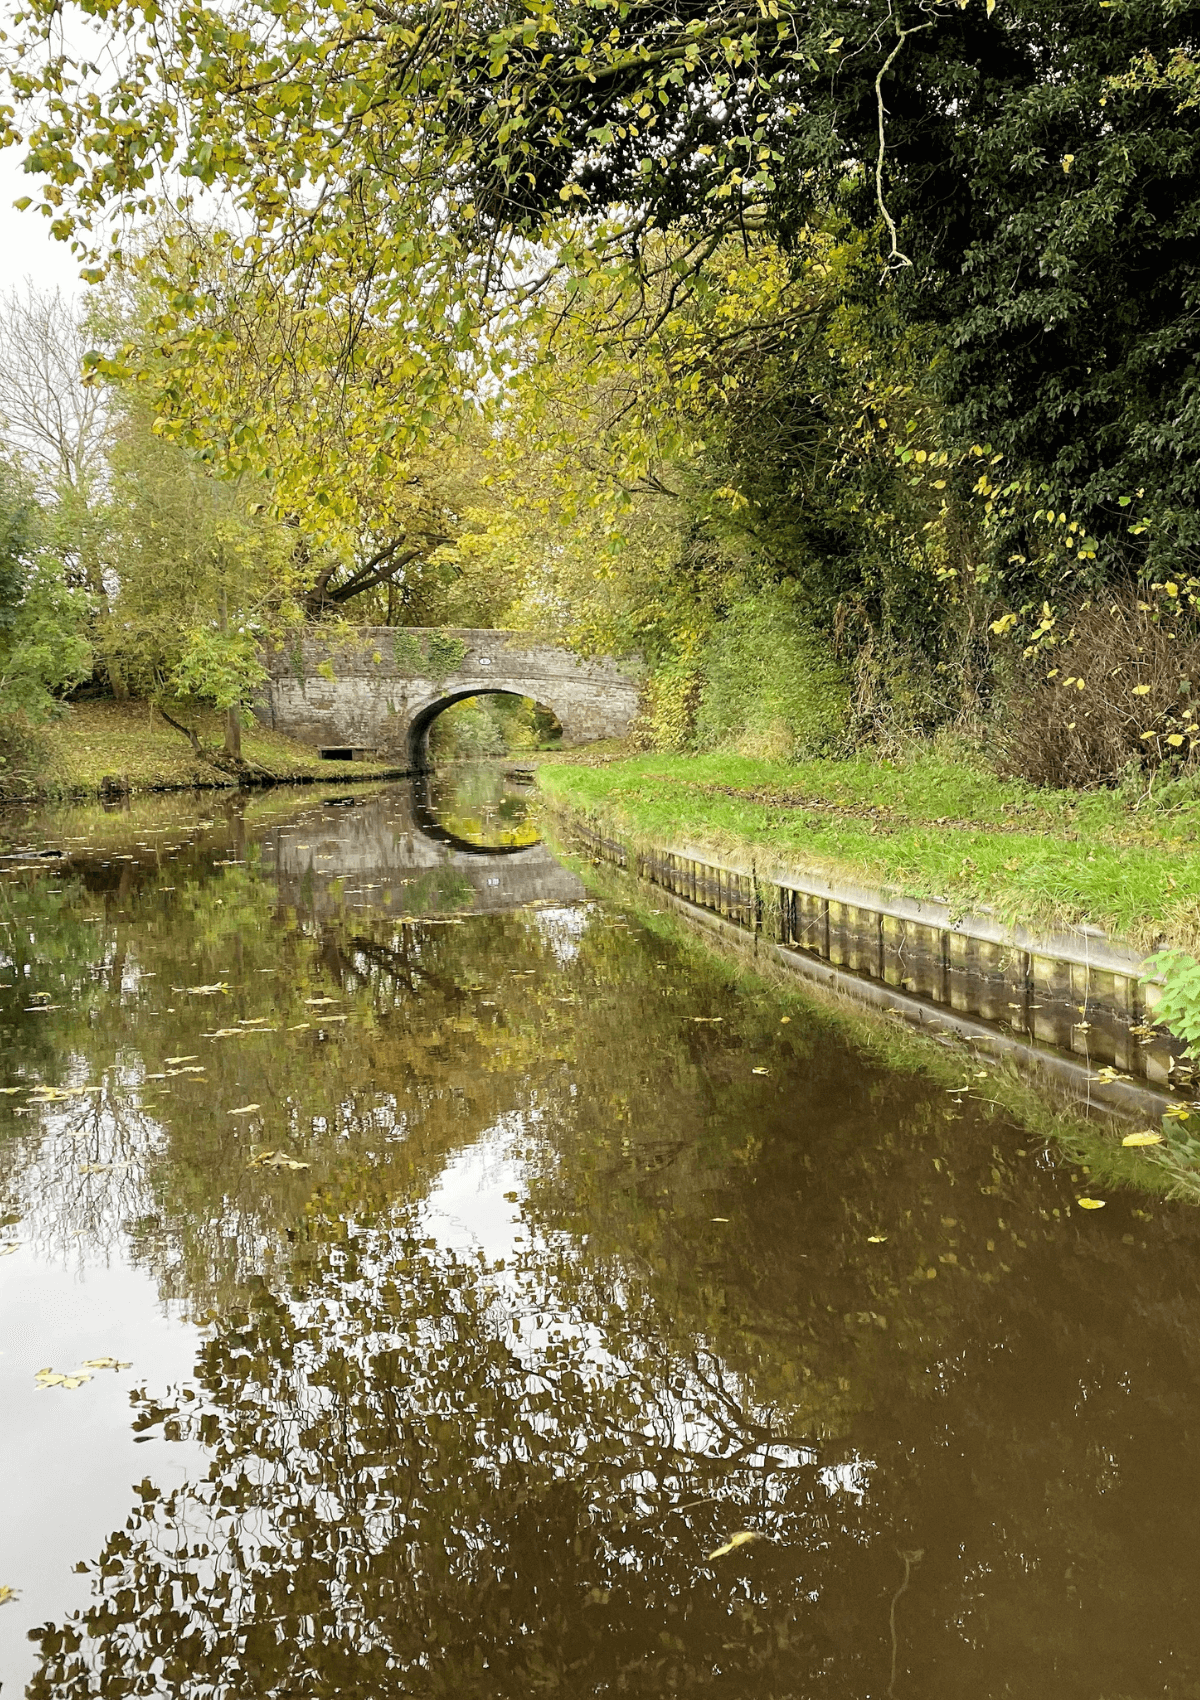 Shropshire Union Canal, Cheshire, England